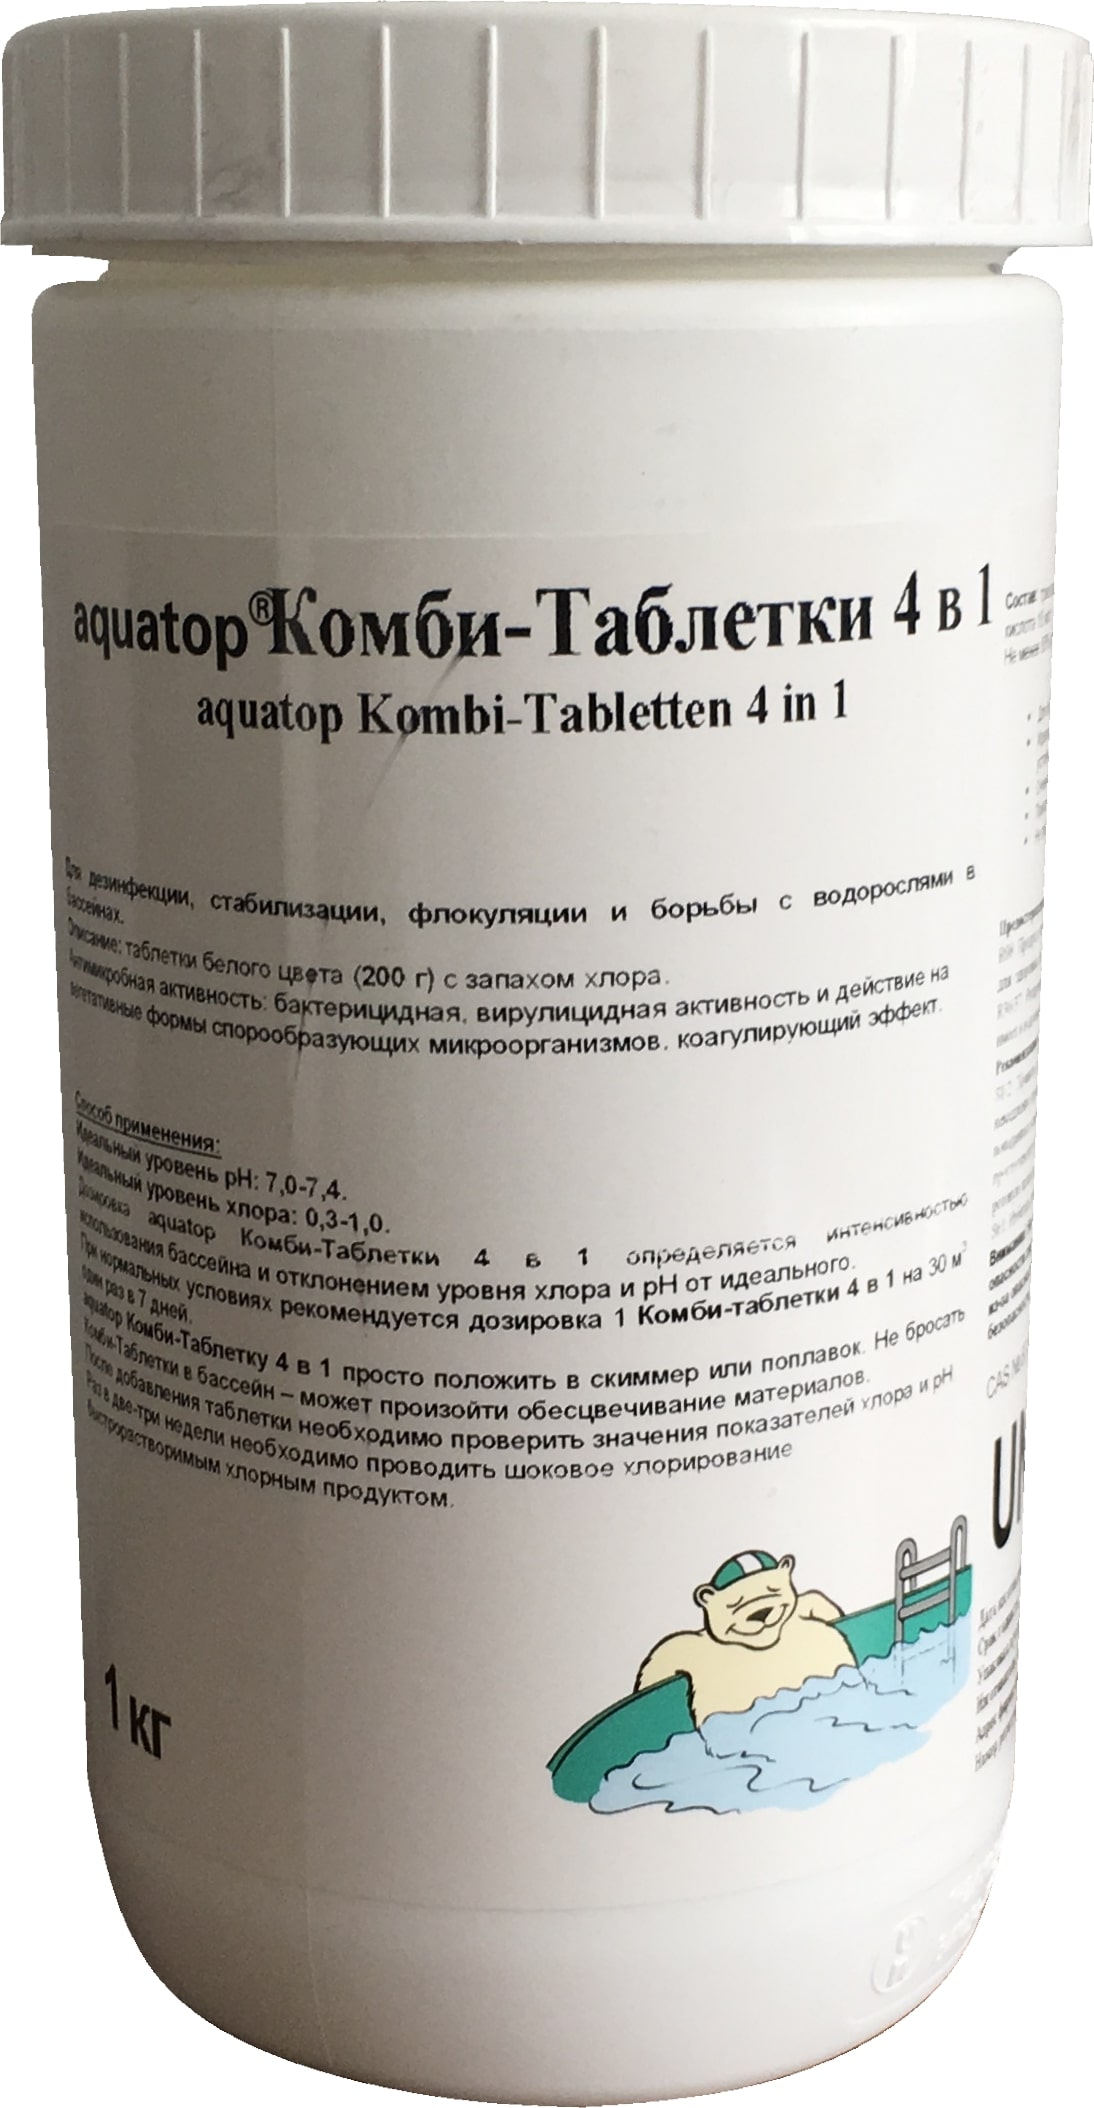 basseynov.ru Комби-Таблетки 4в1 в табл.200г. 90% активного хлора.  (Хлор, флокулянт, альгицид, рН) - 1кг